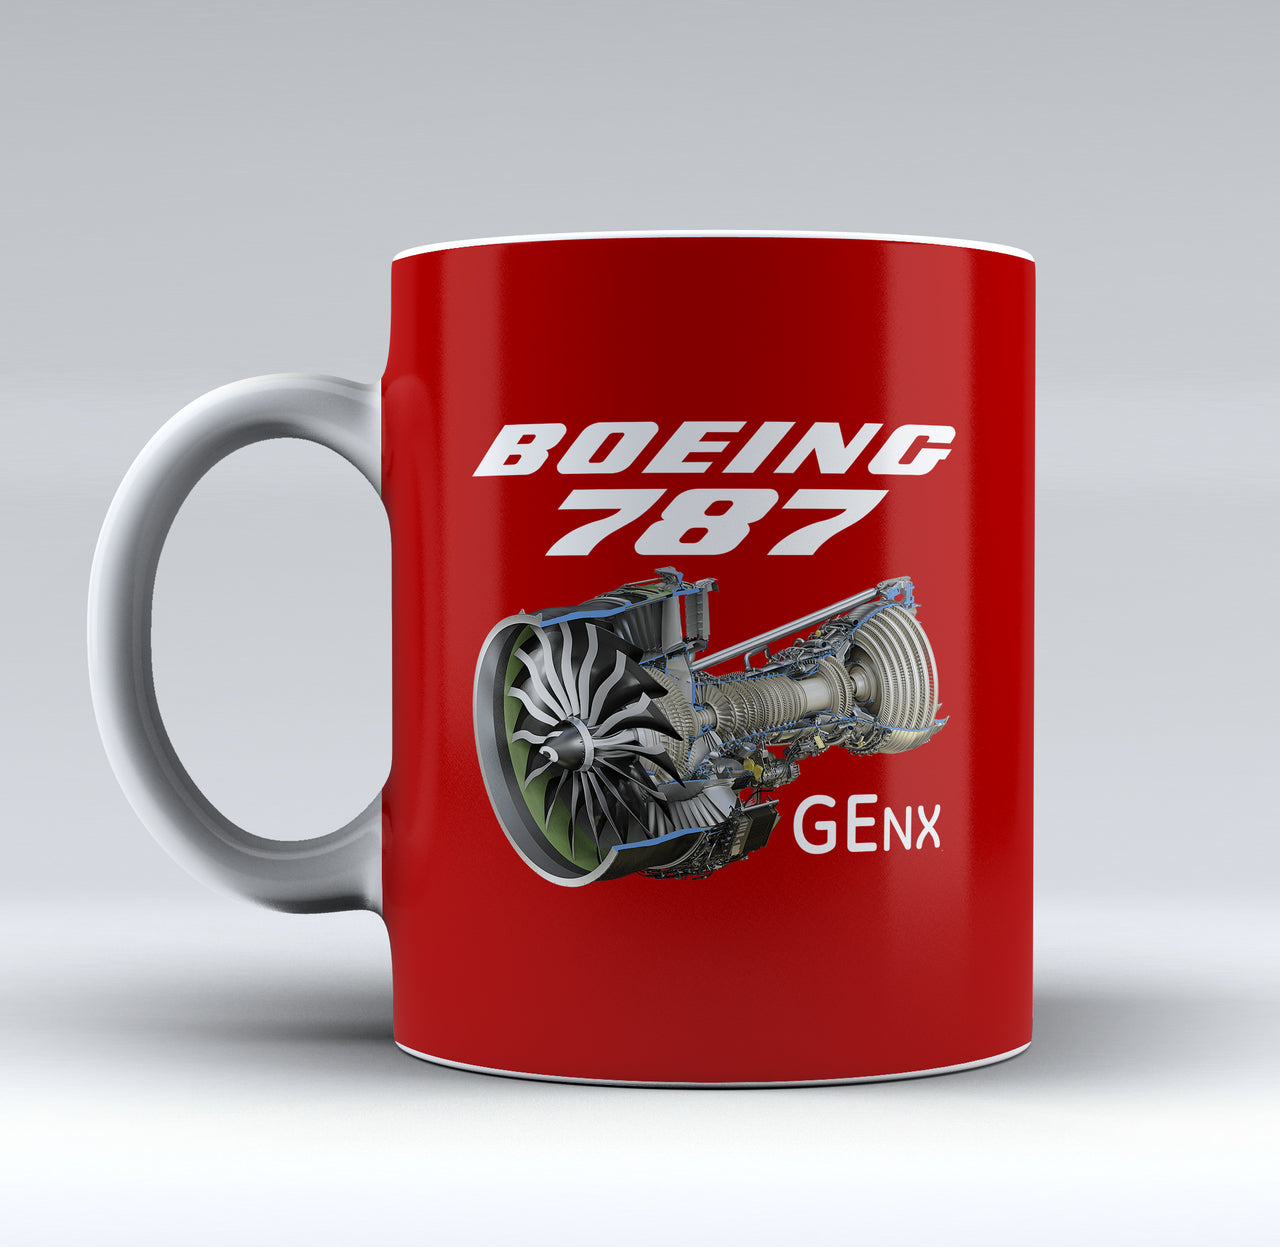 Boeing 787 & GENX Engine Designed Mugs